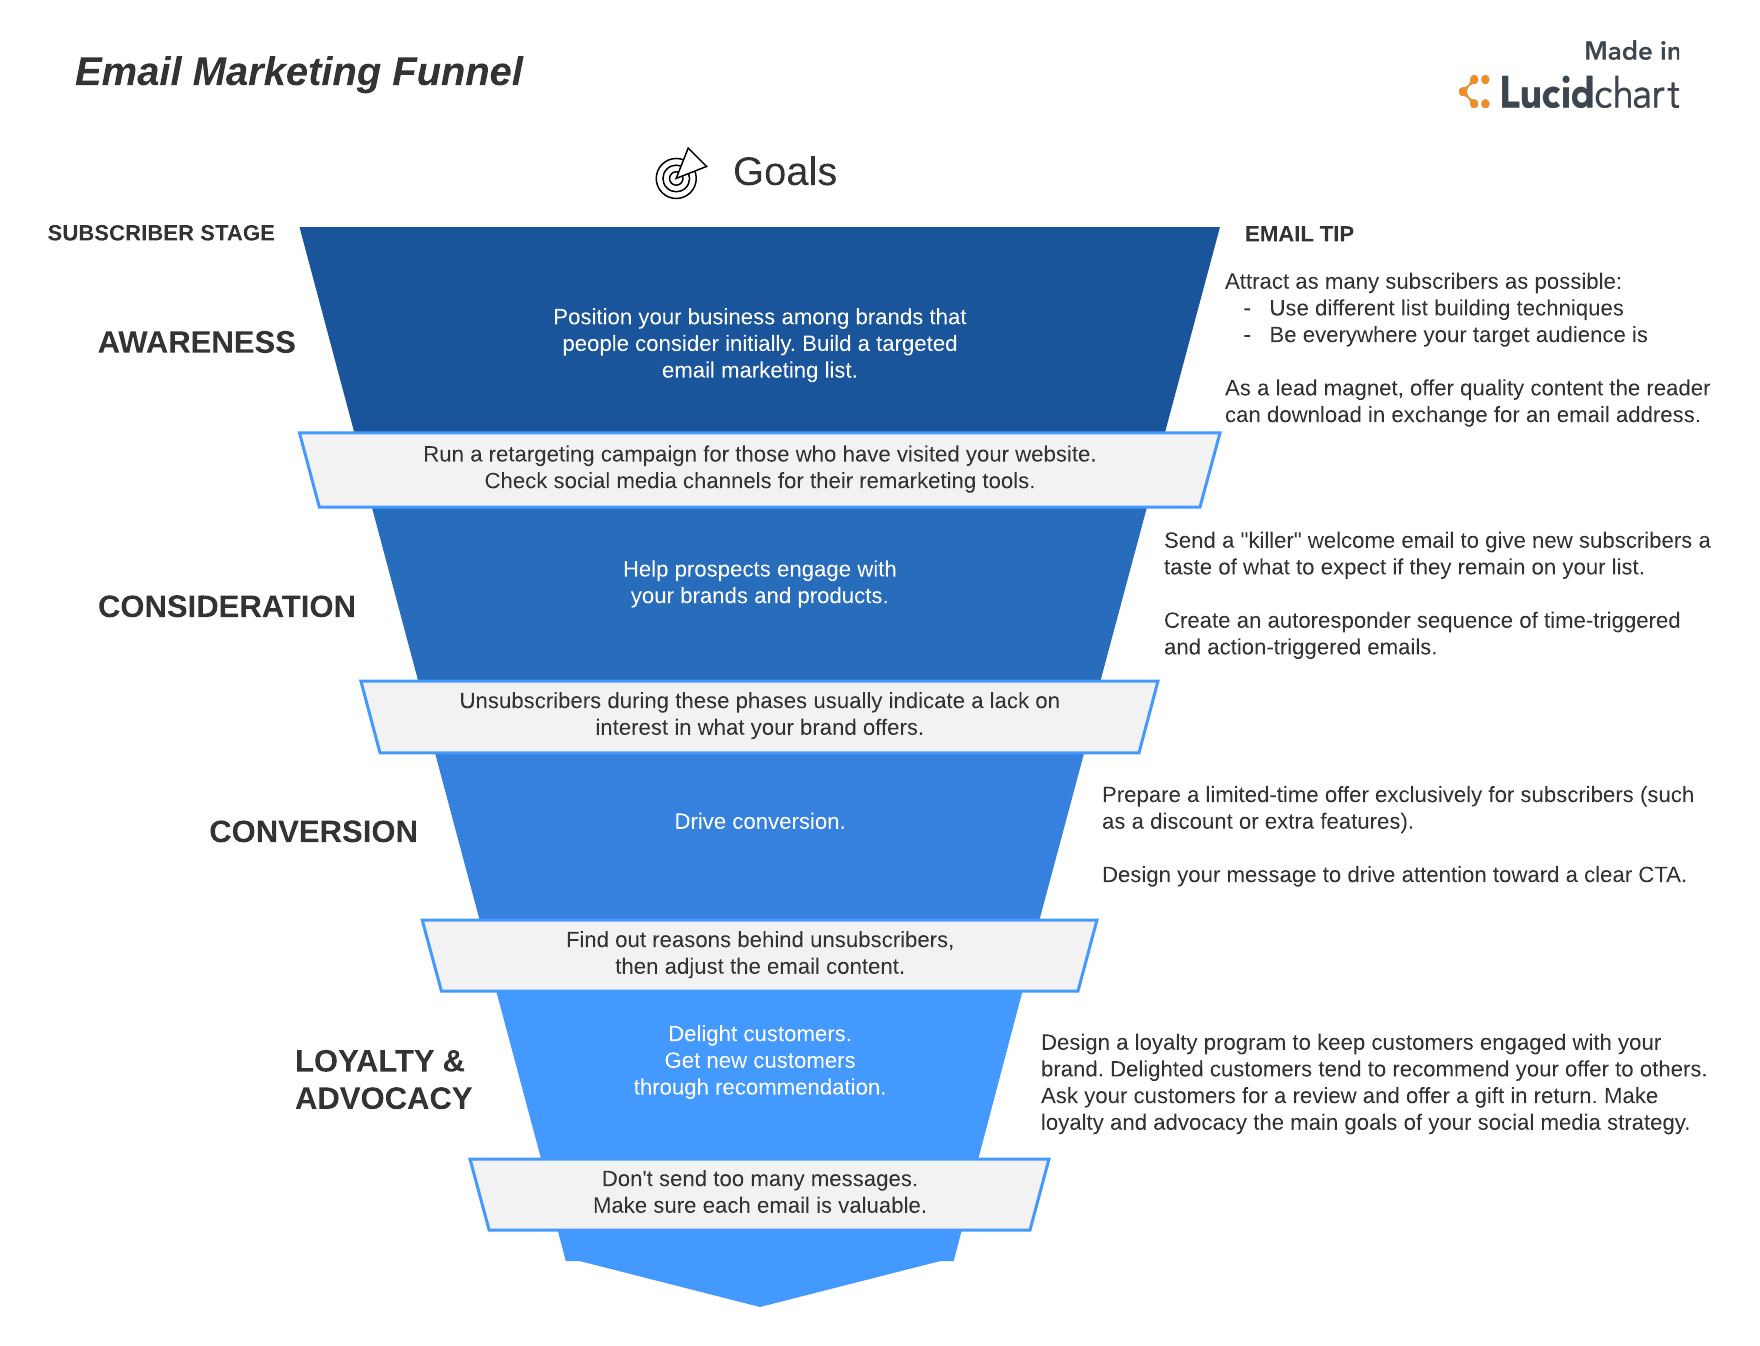 Master the 5-Step Email Marketing Funnel | Lucidchart Blog